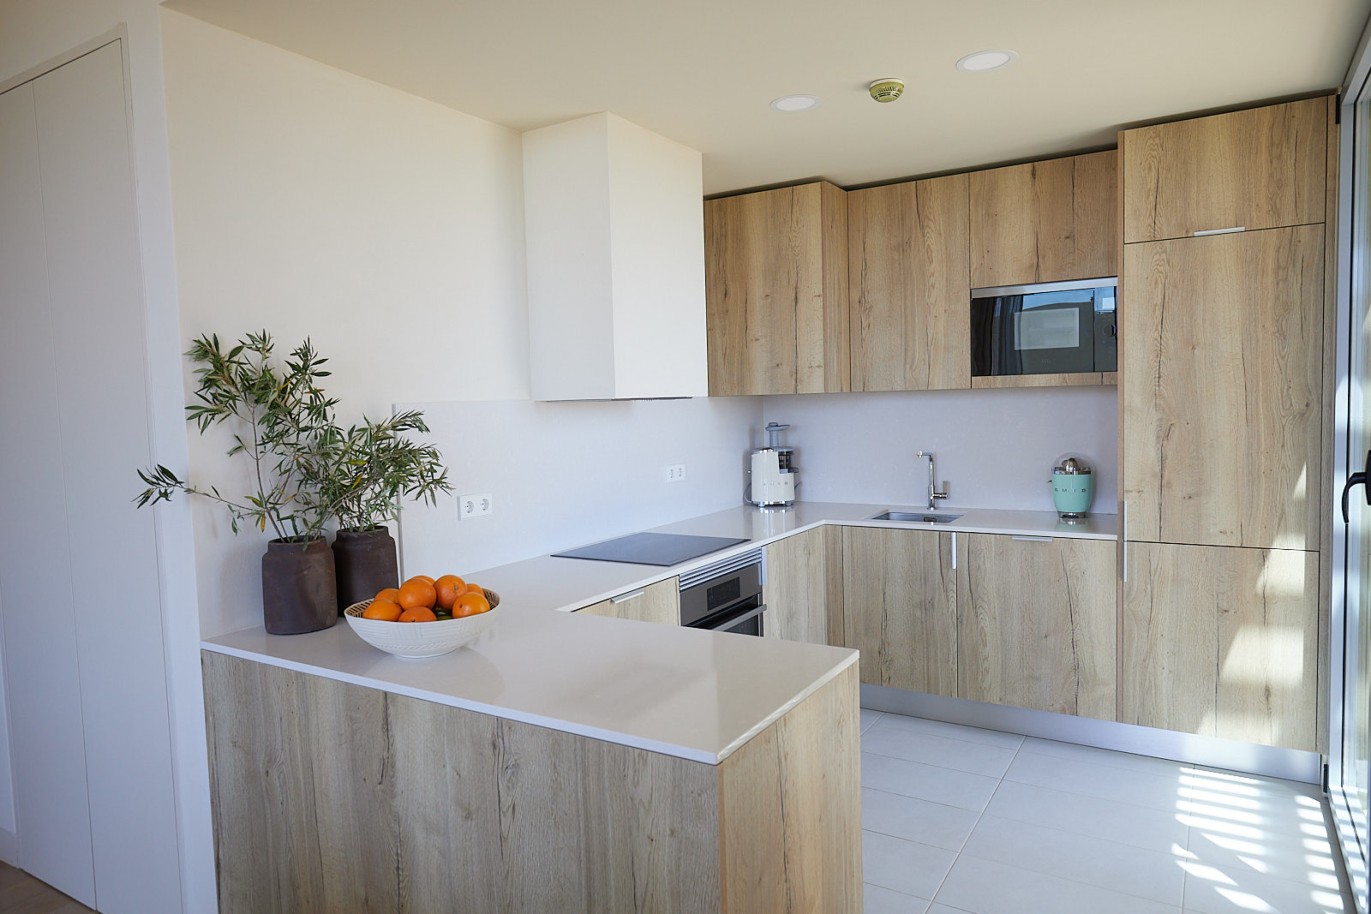 2 bedroom apartment in resort, for sale in Porches, Algarve_229238